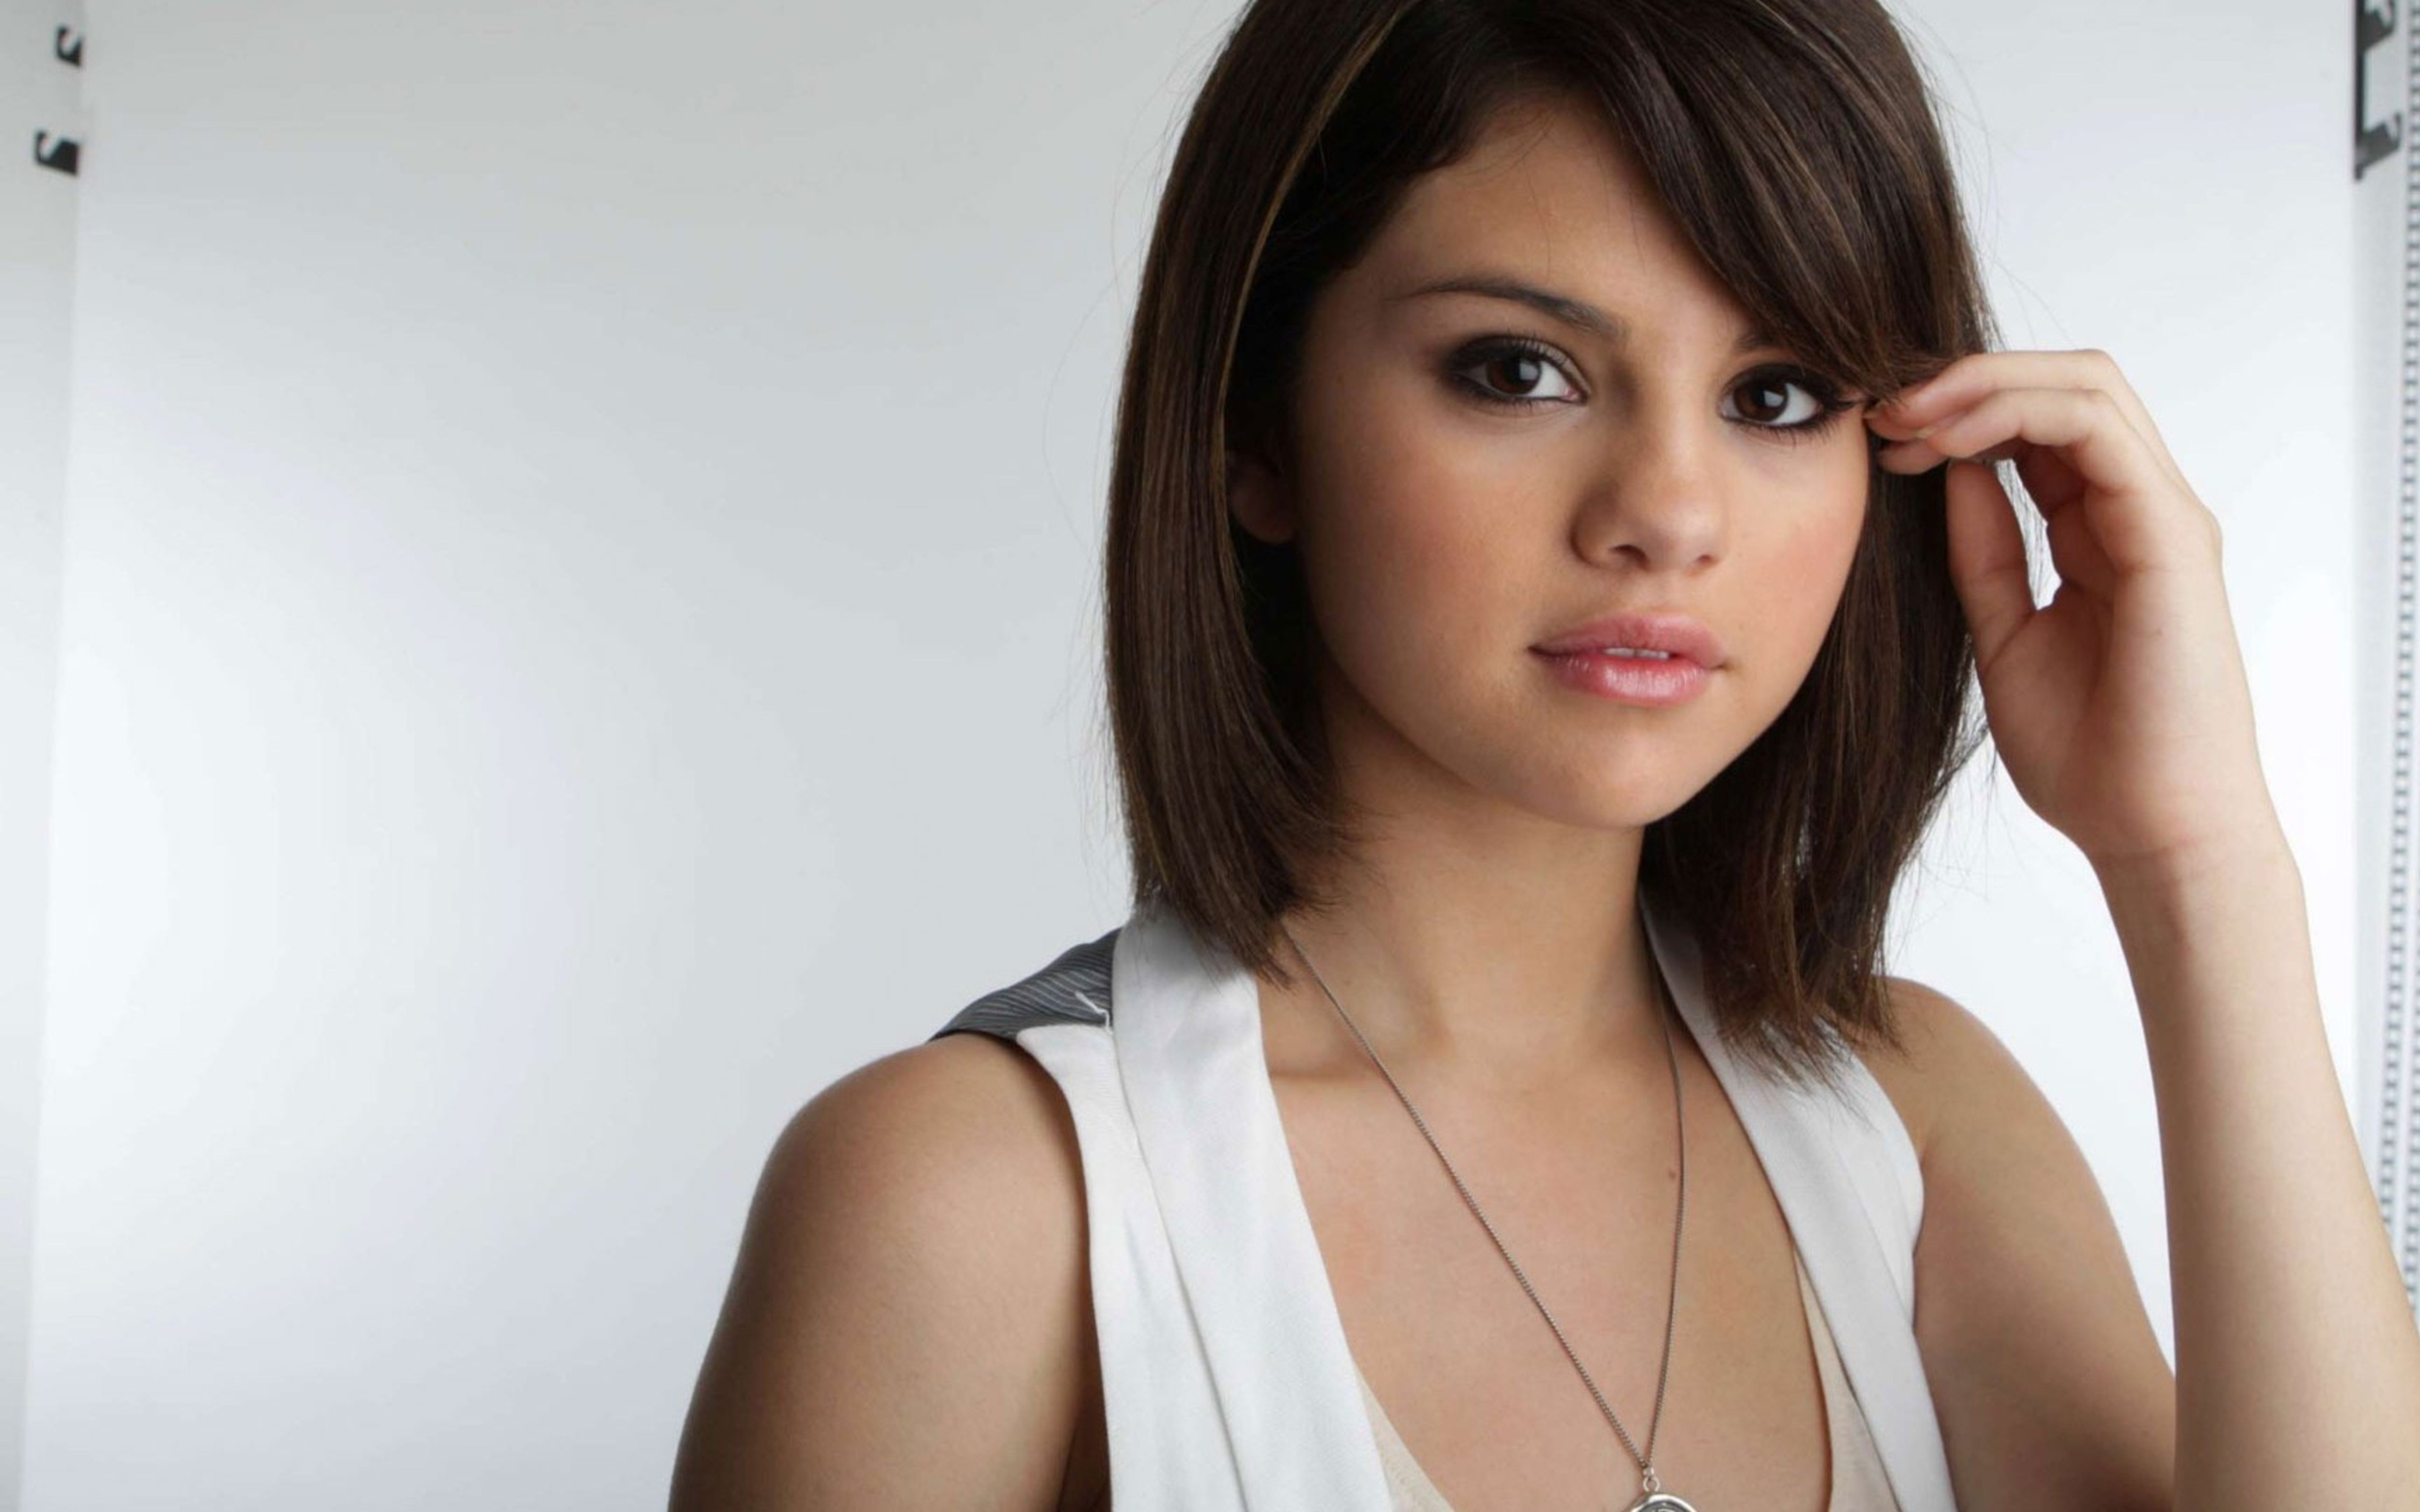 Wallpaper Selena Gomez